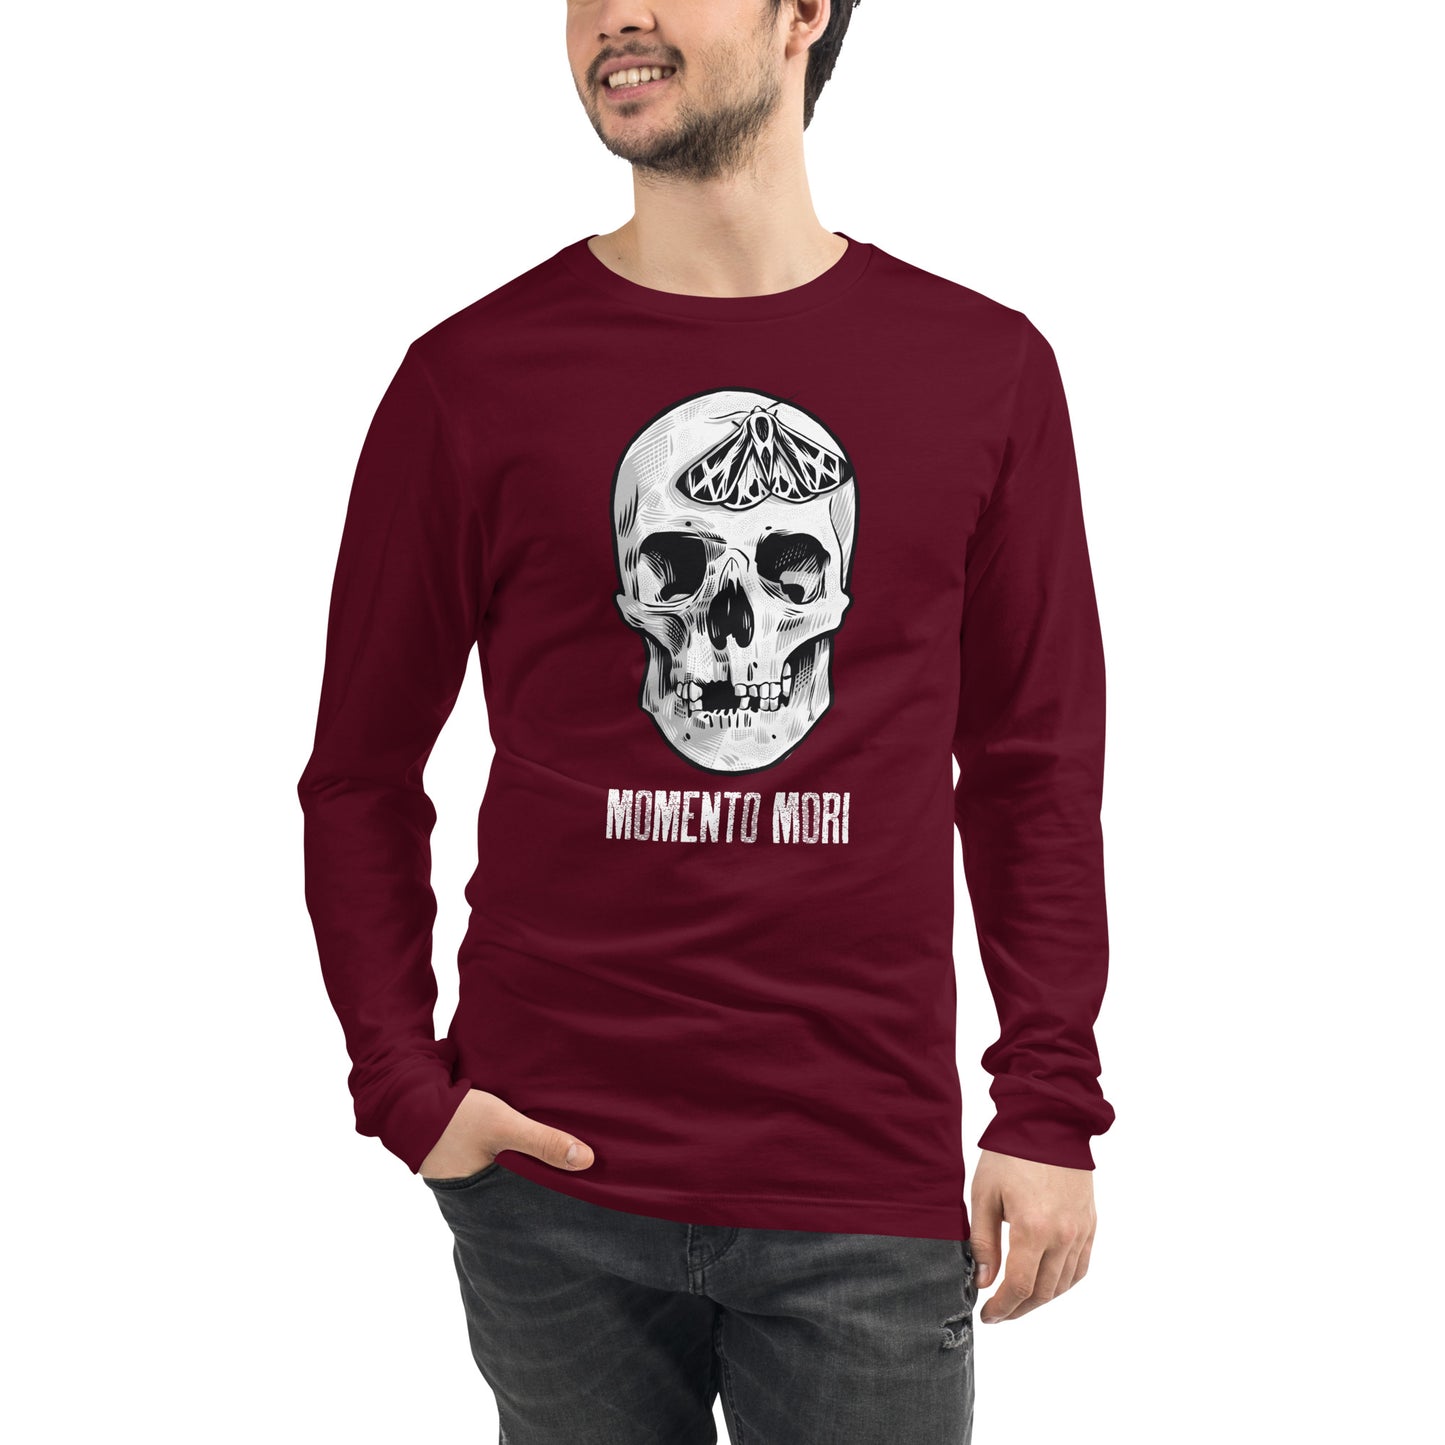 Memento Mori T-shirt Philosophical Tee - Gothic Latin Cotton Shirt with Timeless Reminder